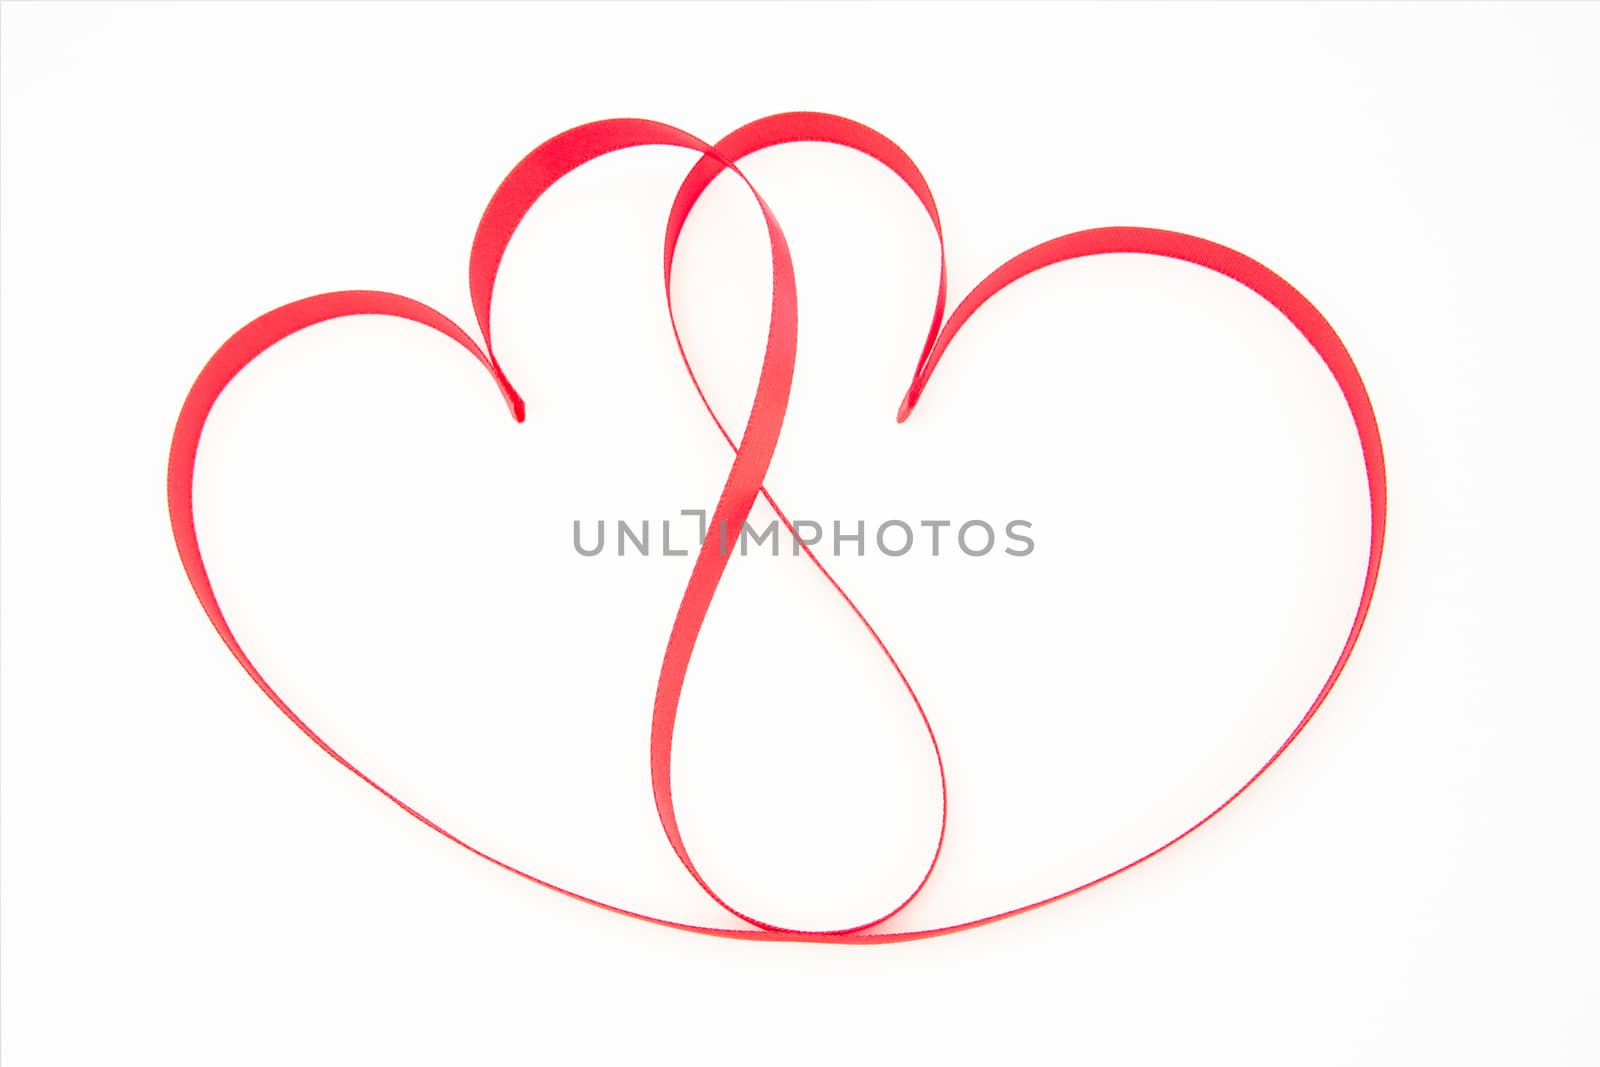 Pink ribbon shaped into intertwining hearts by Wavebreakmedia